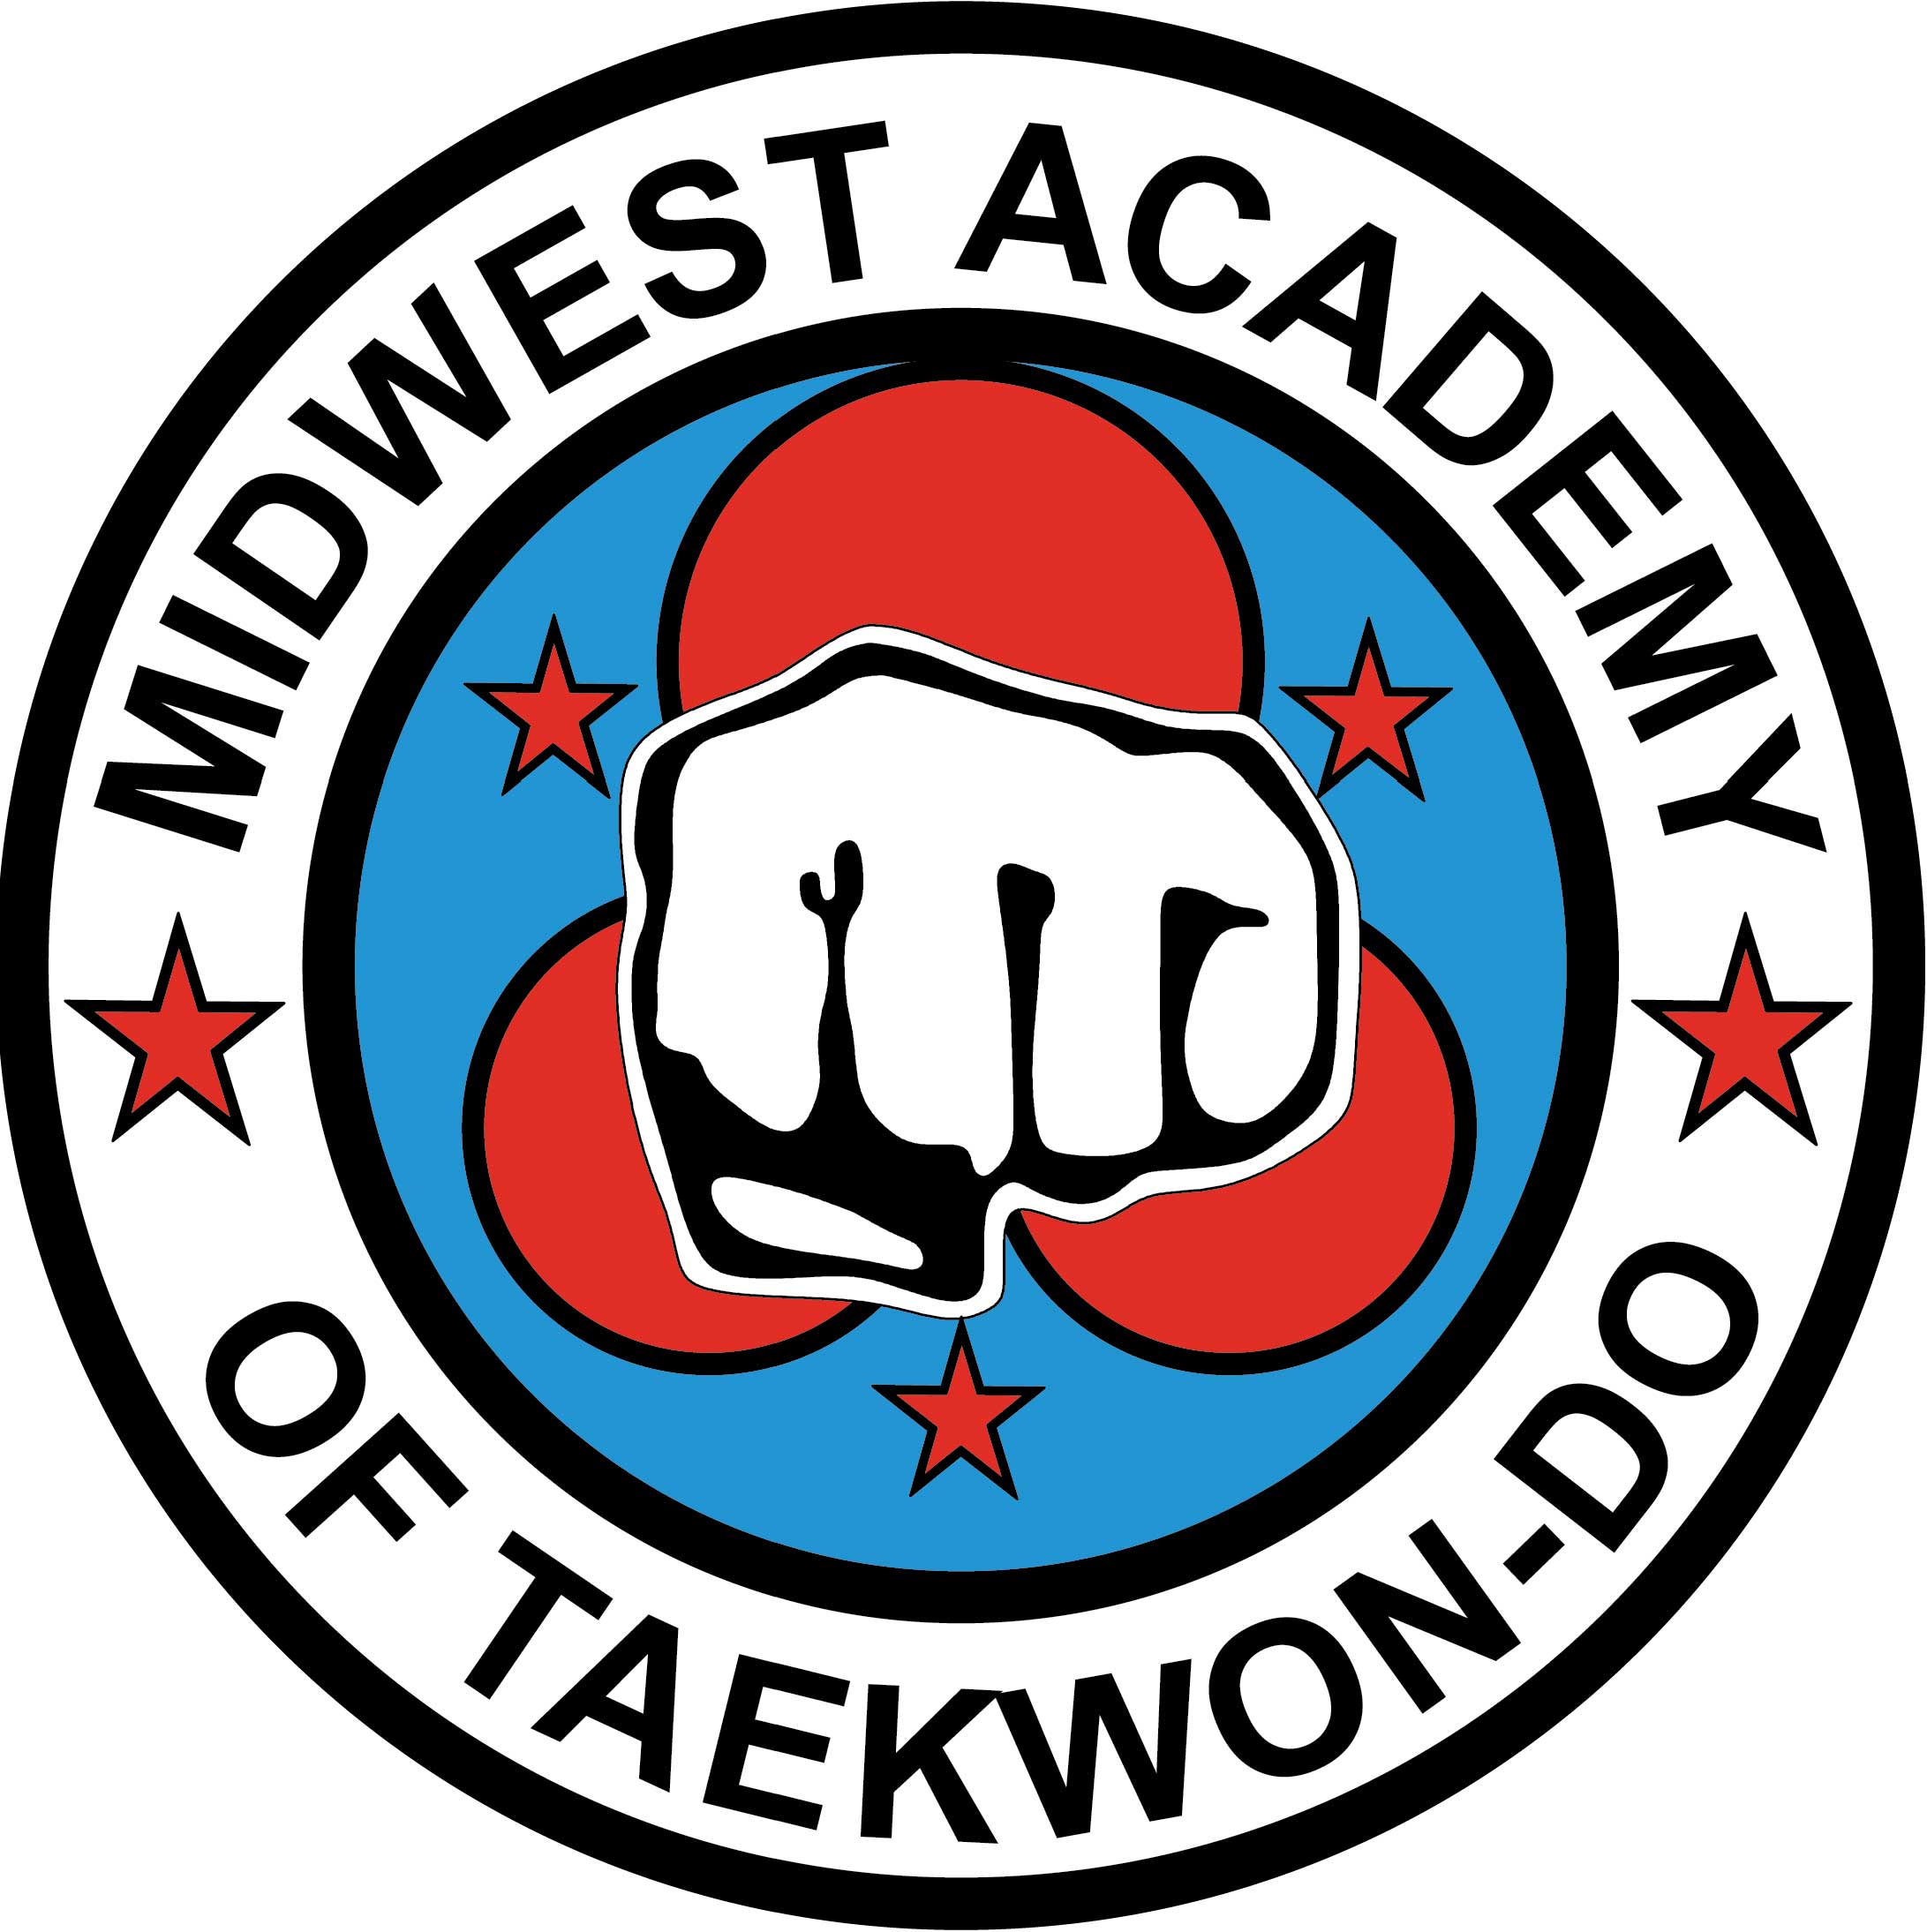 Midwest Academy of Taekwon-Do